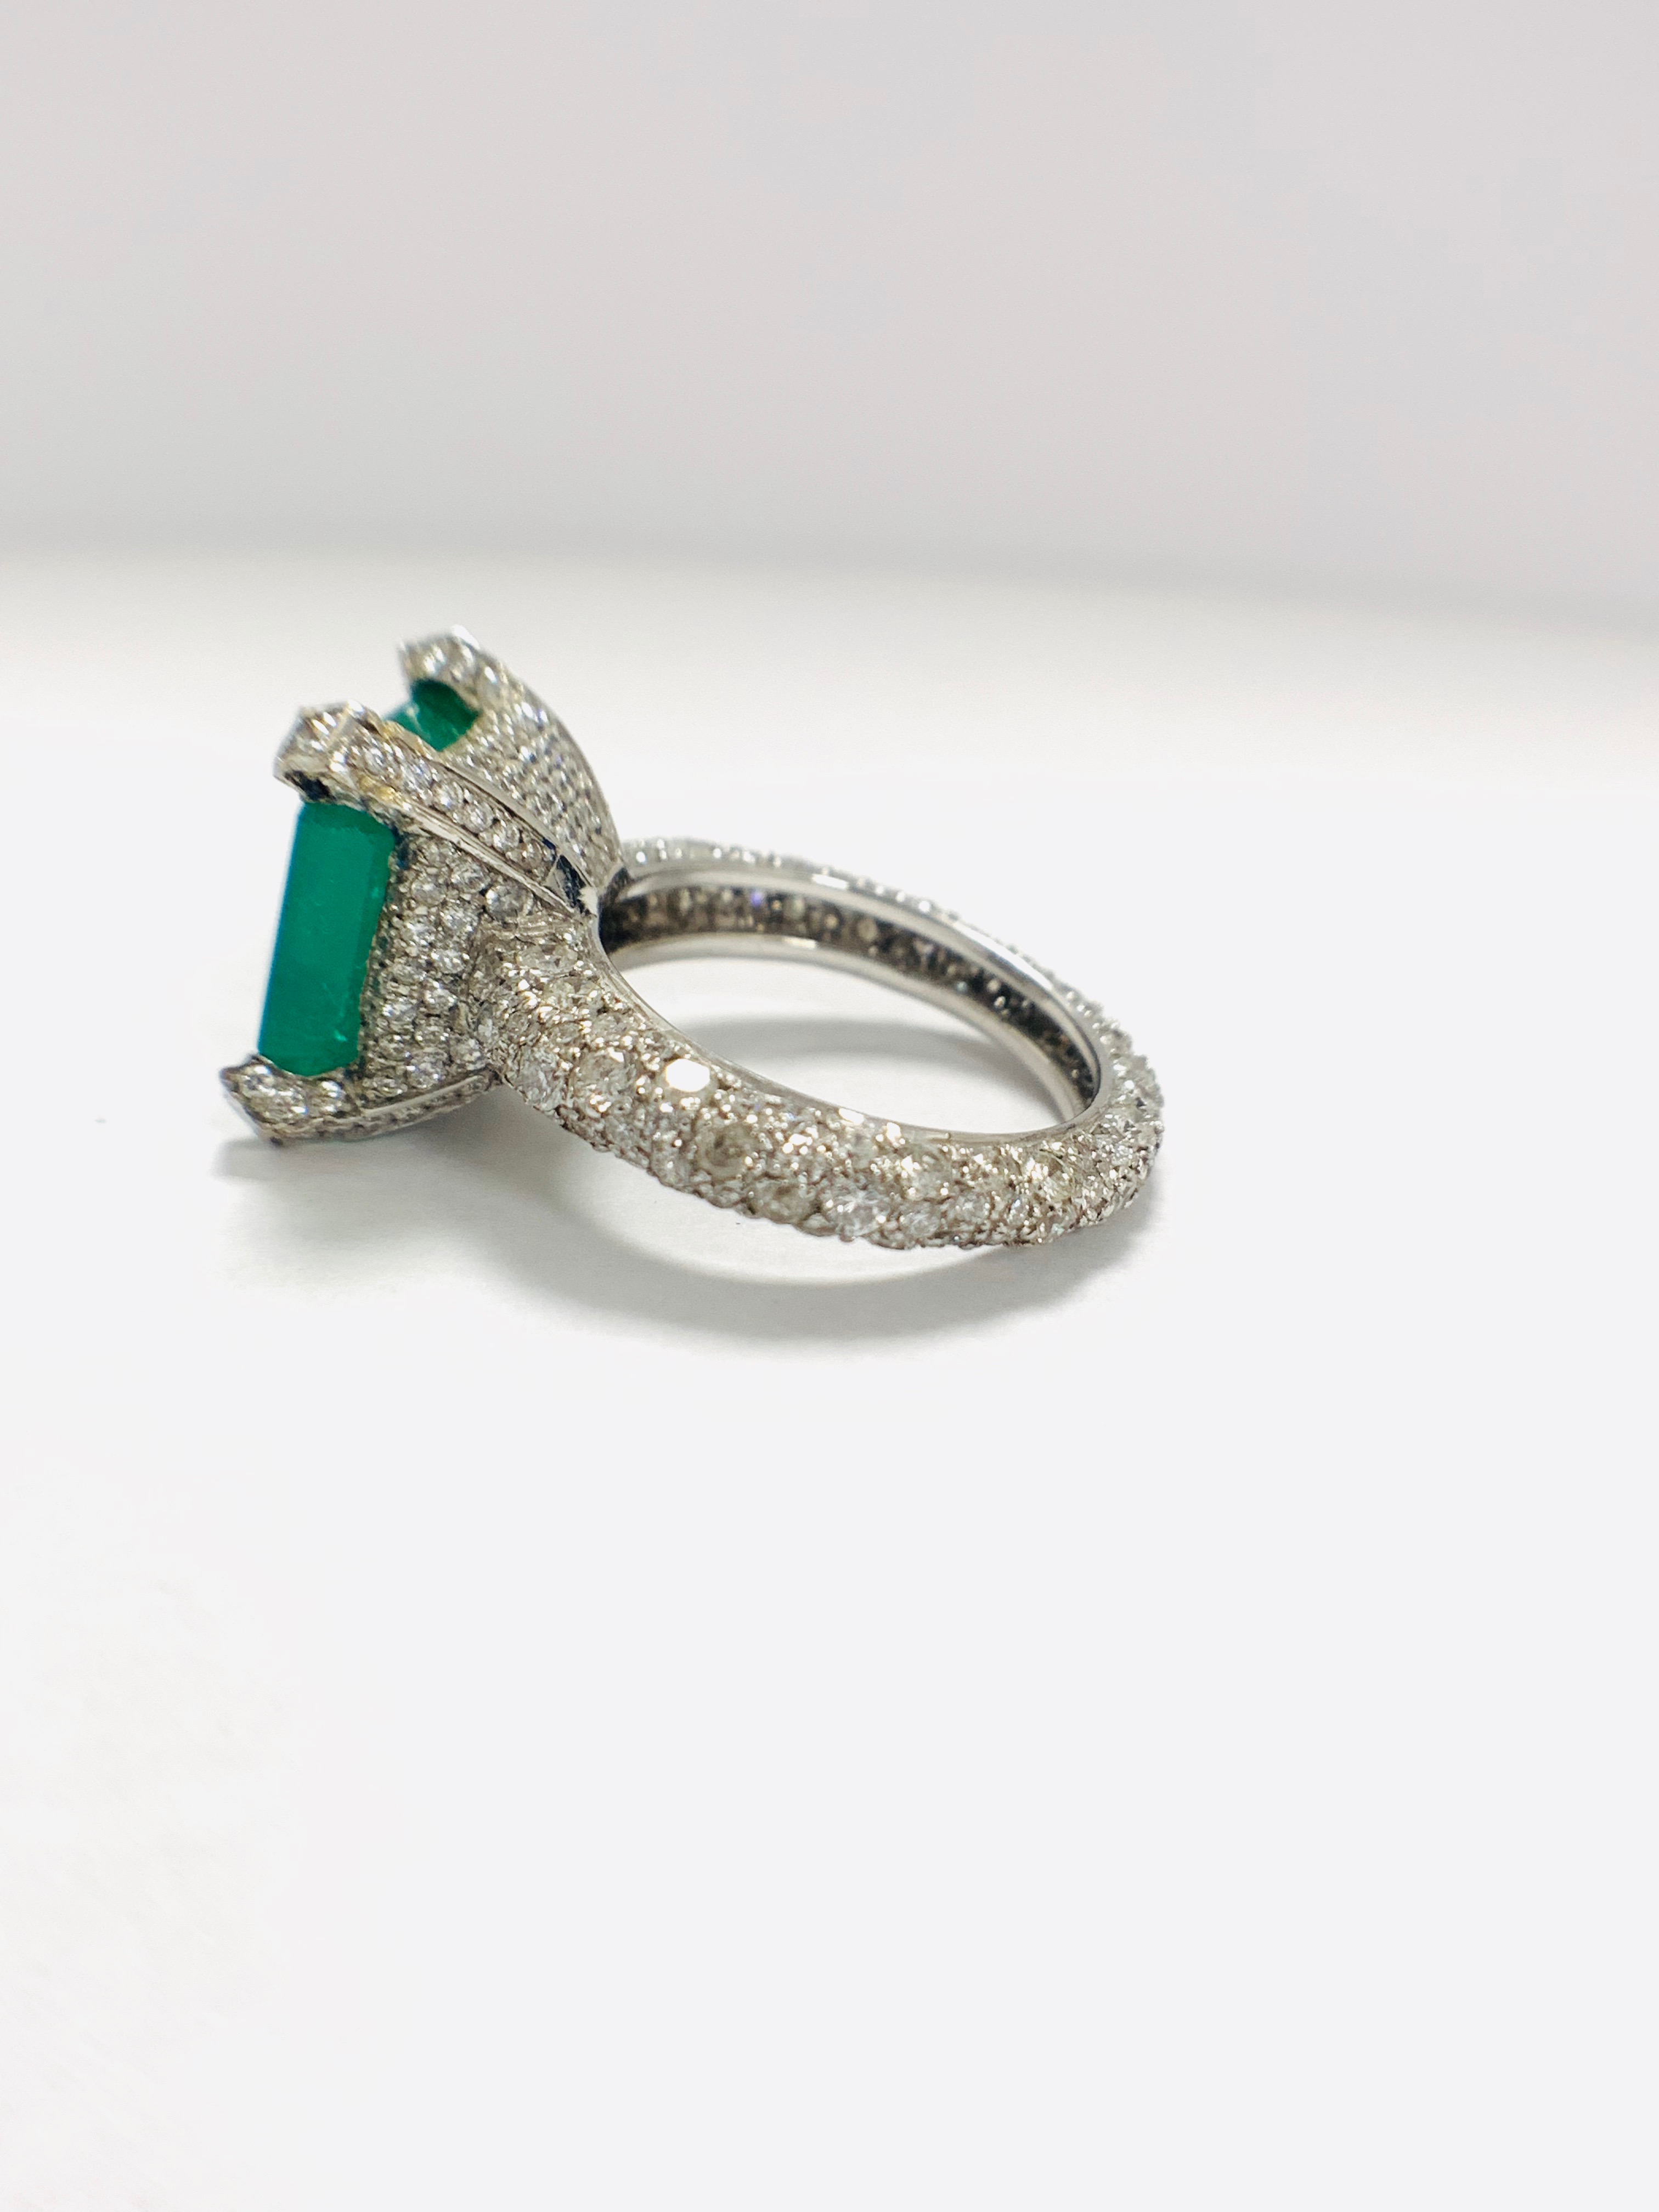 Platinum Emerald and Diamond ring - Image 4 of 17